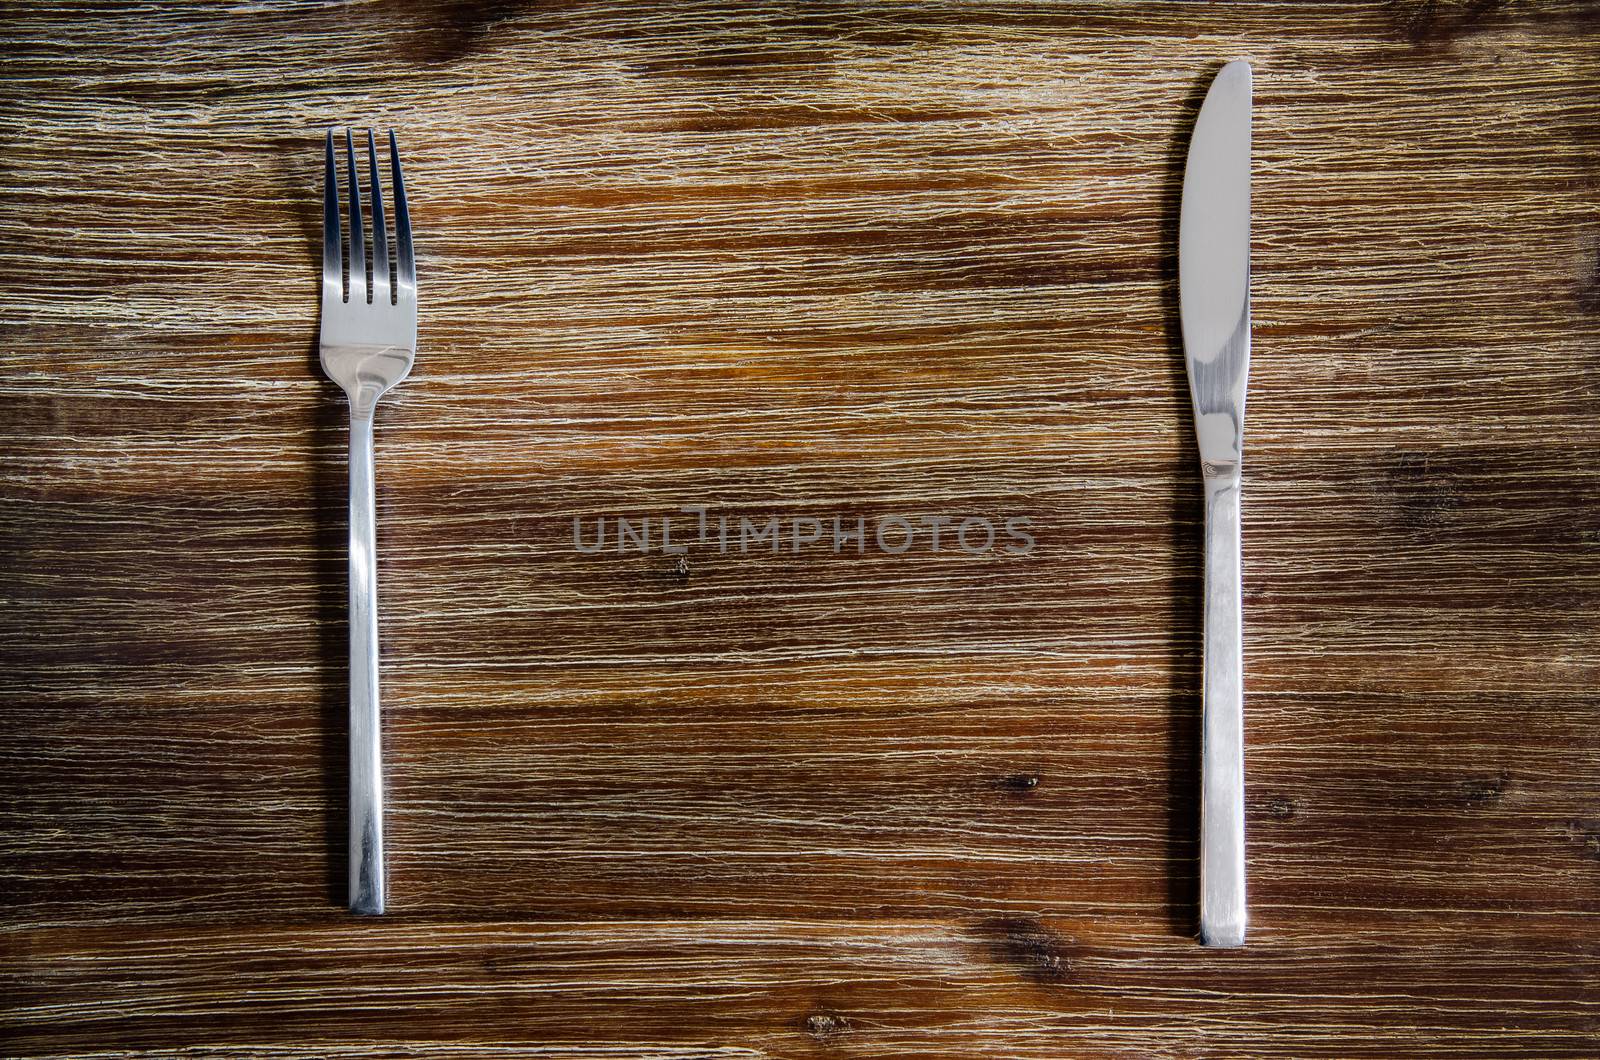 Knife and fork set on a wooden vintage table